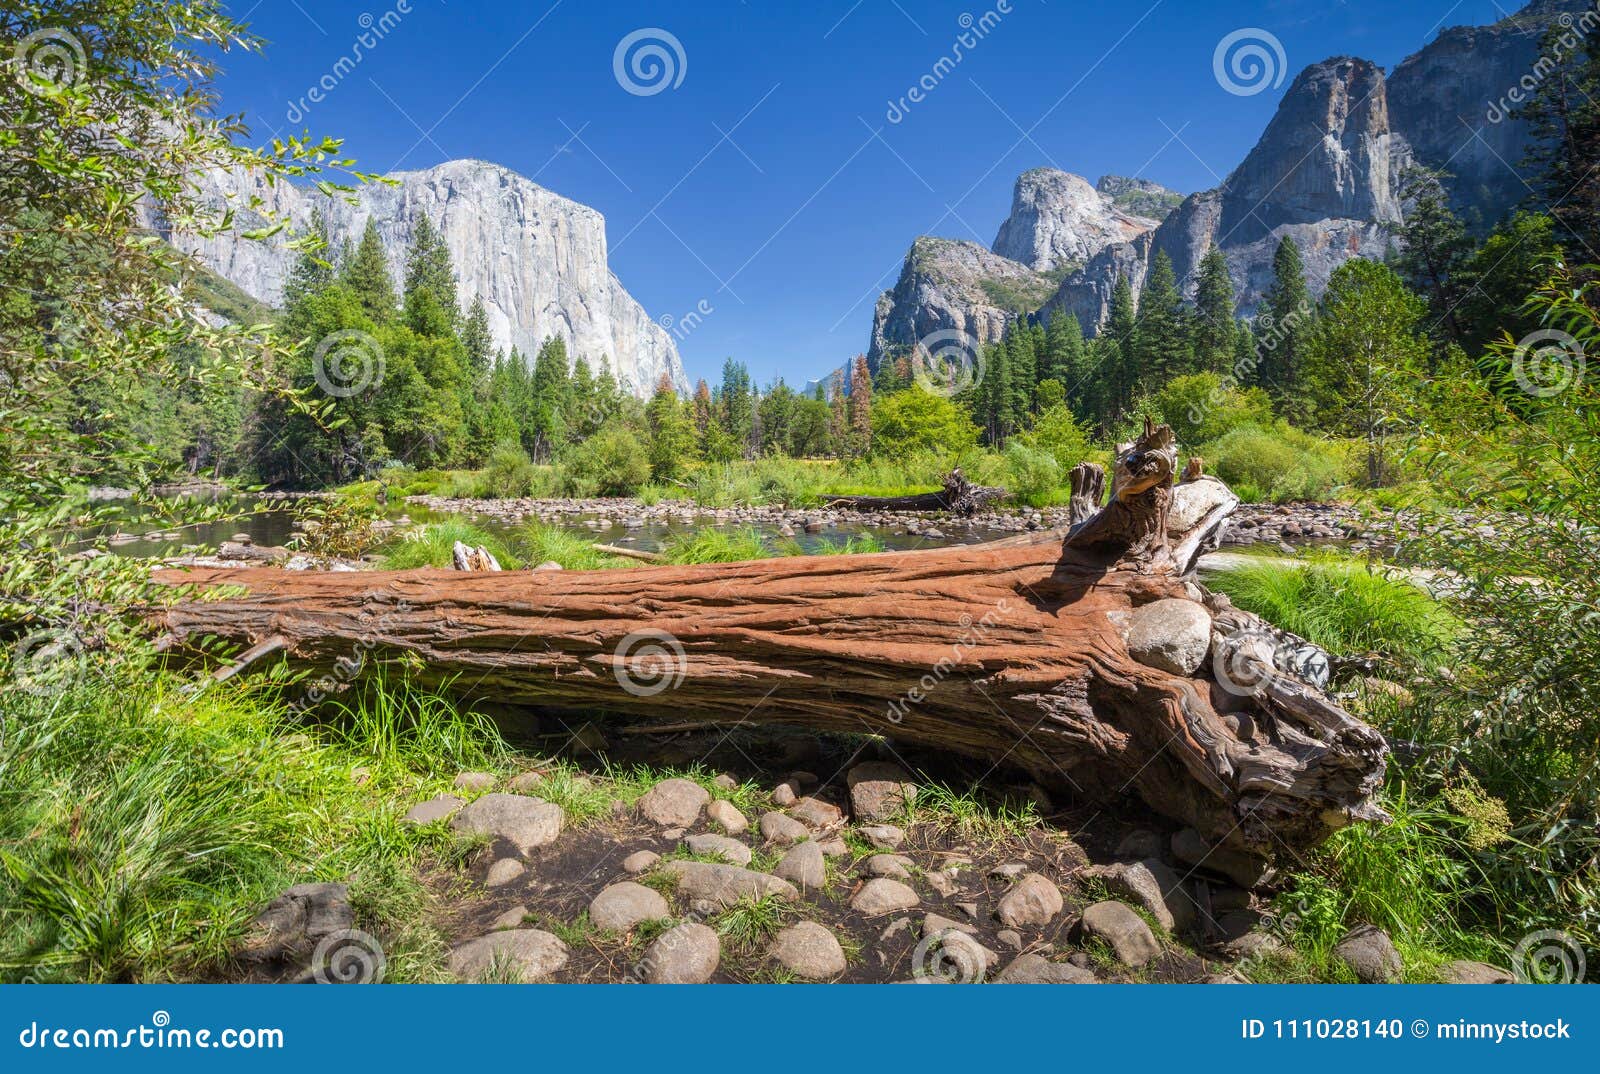 yosemite national park in summer, california, usa